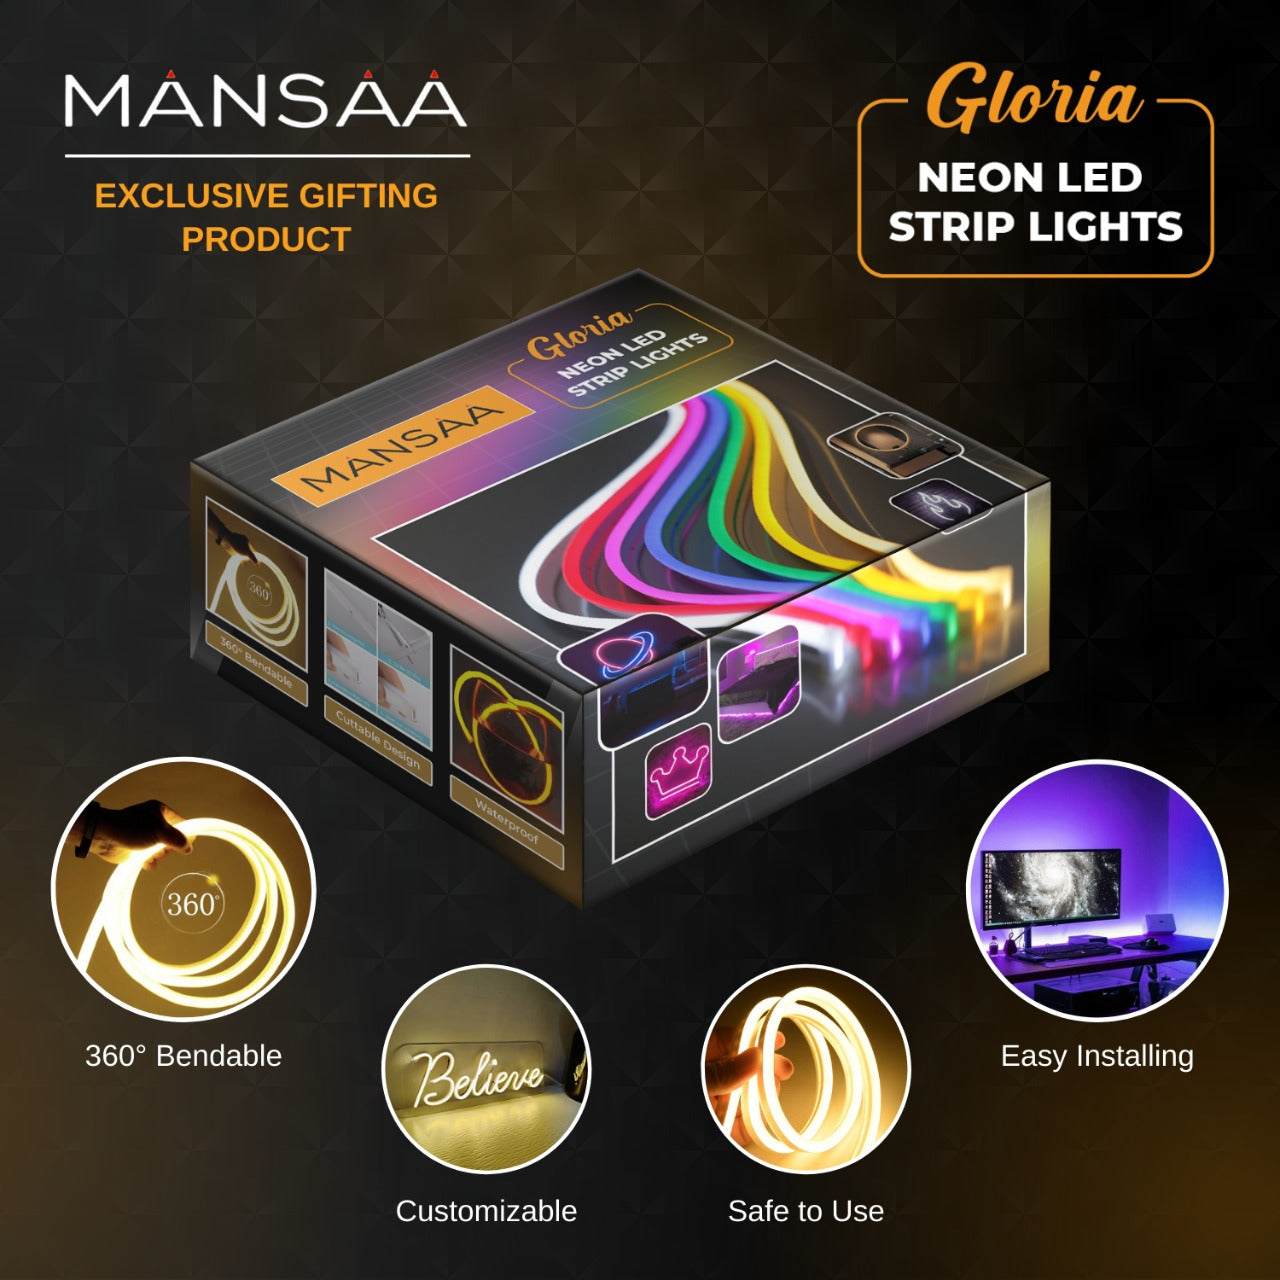 GLORIA Neon LED Strip Lights – MANSAA